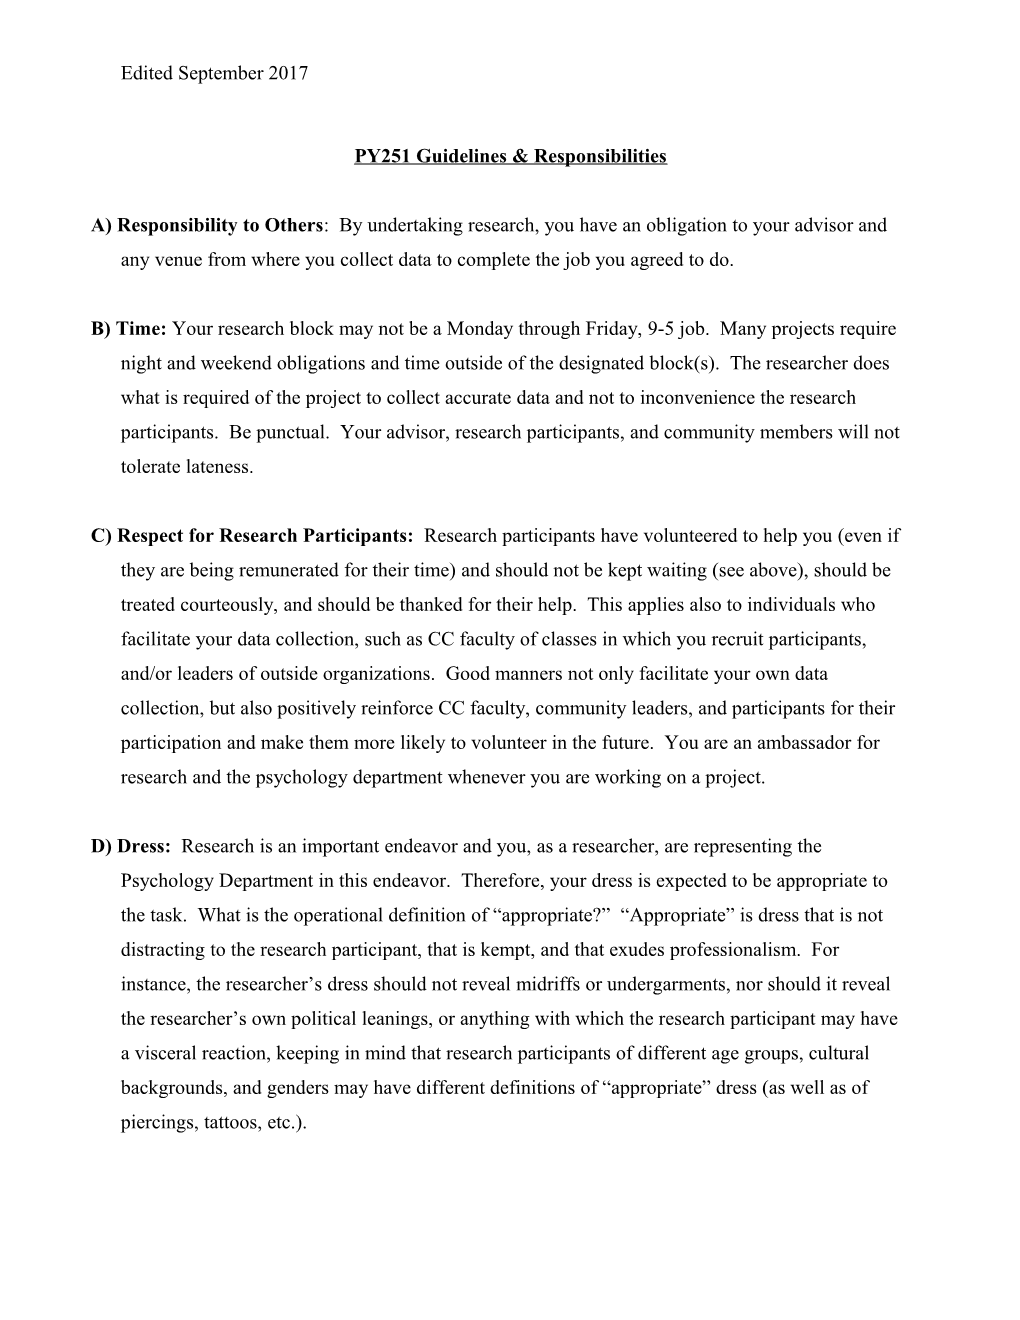 PY251 Guidelines & Responsibilities